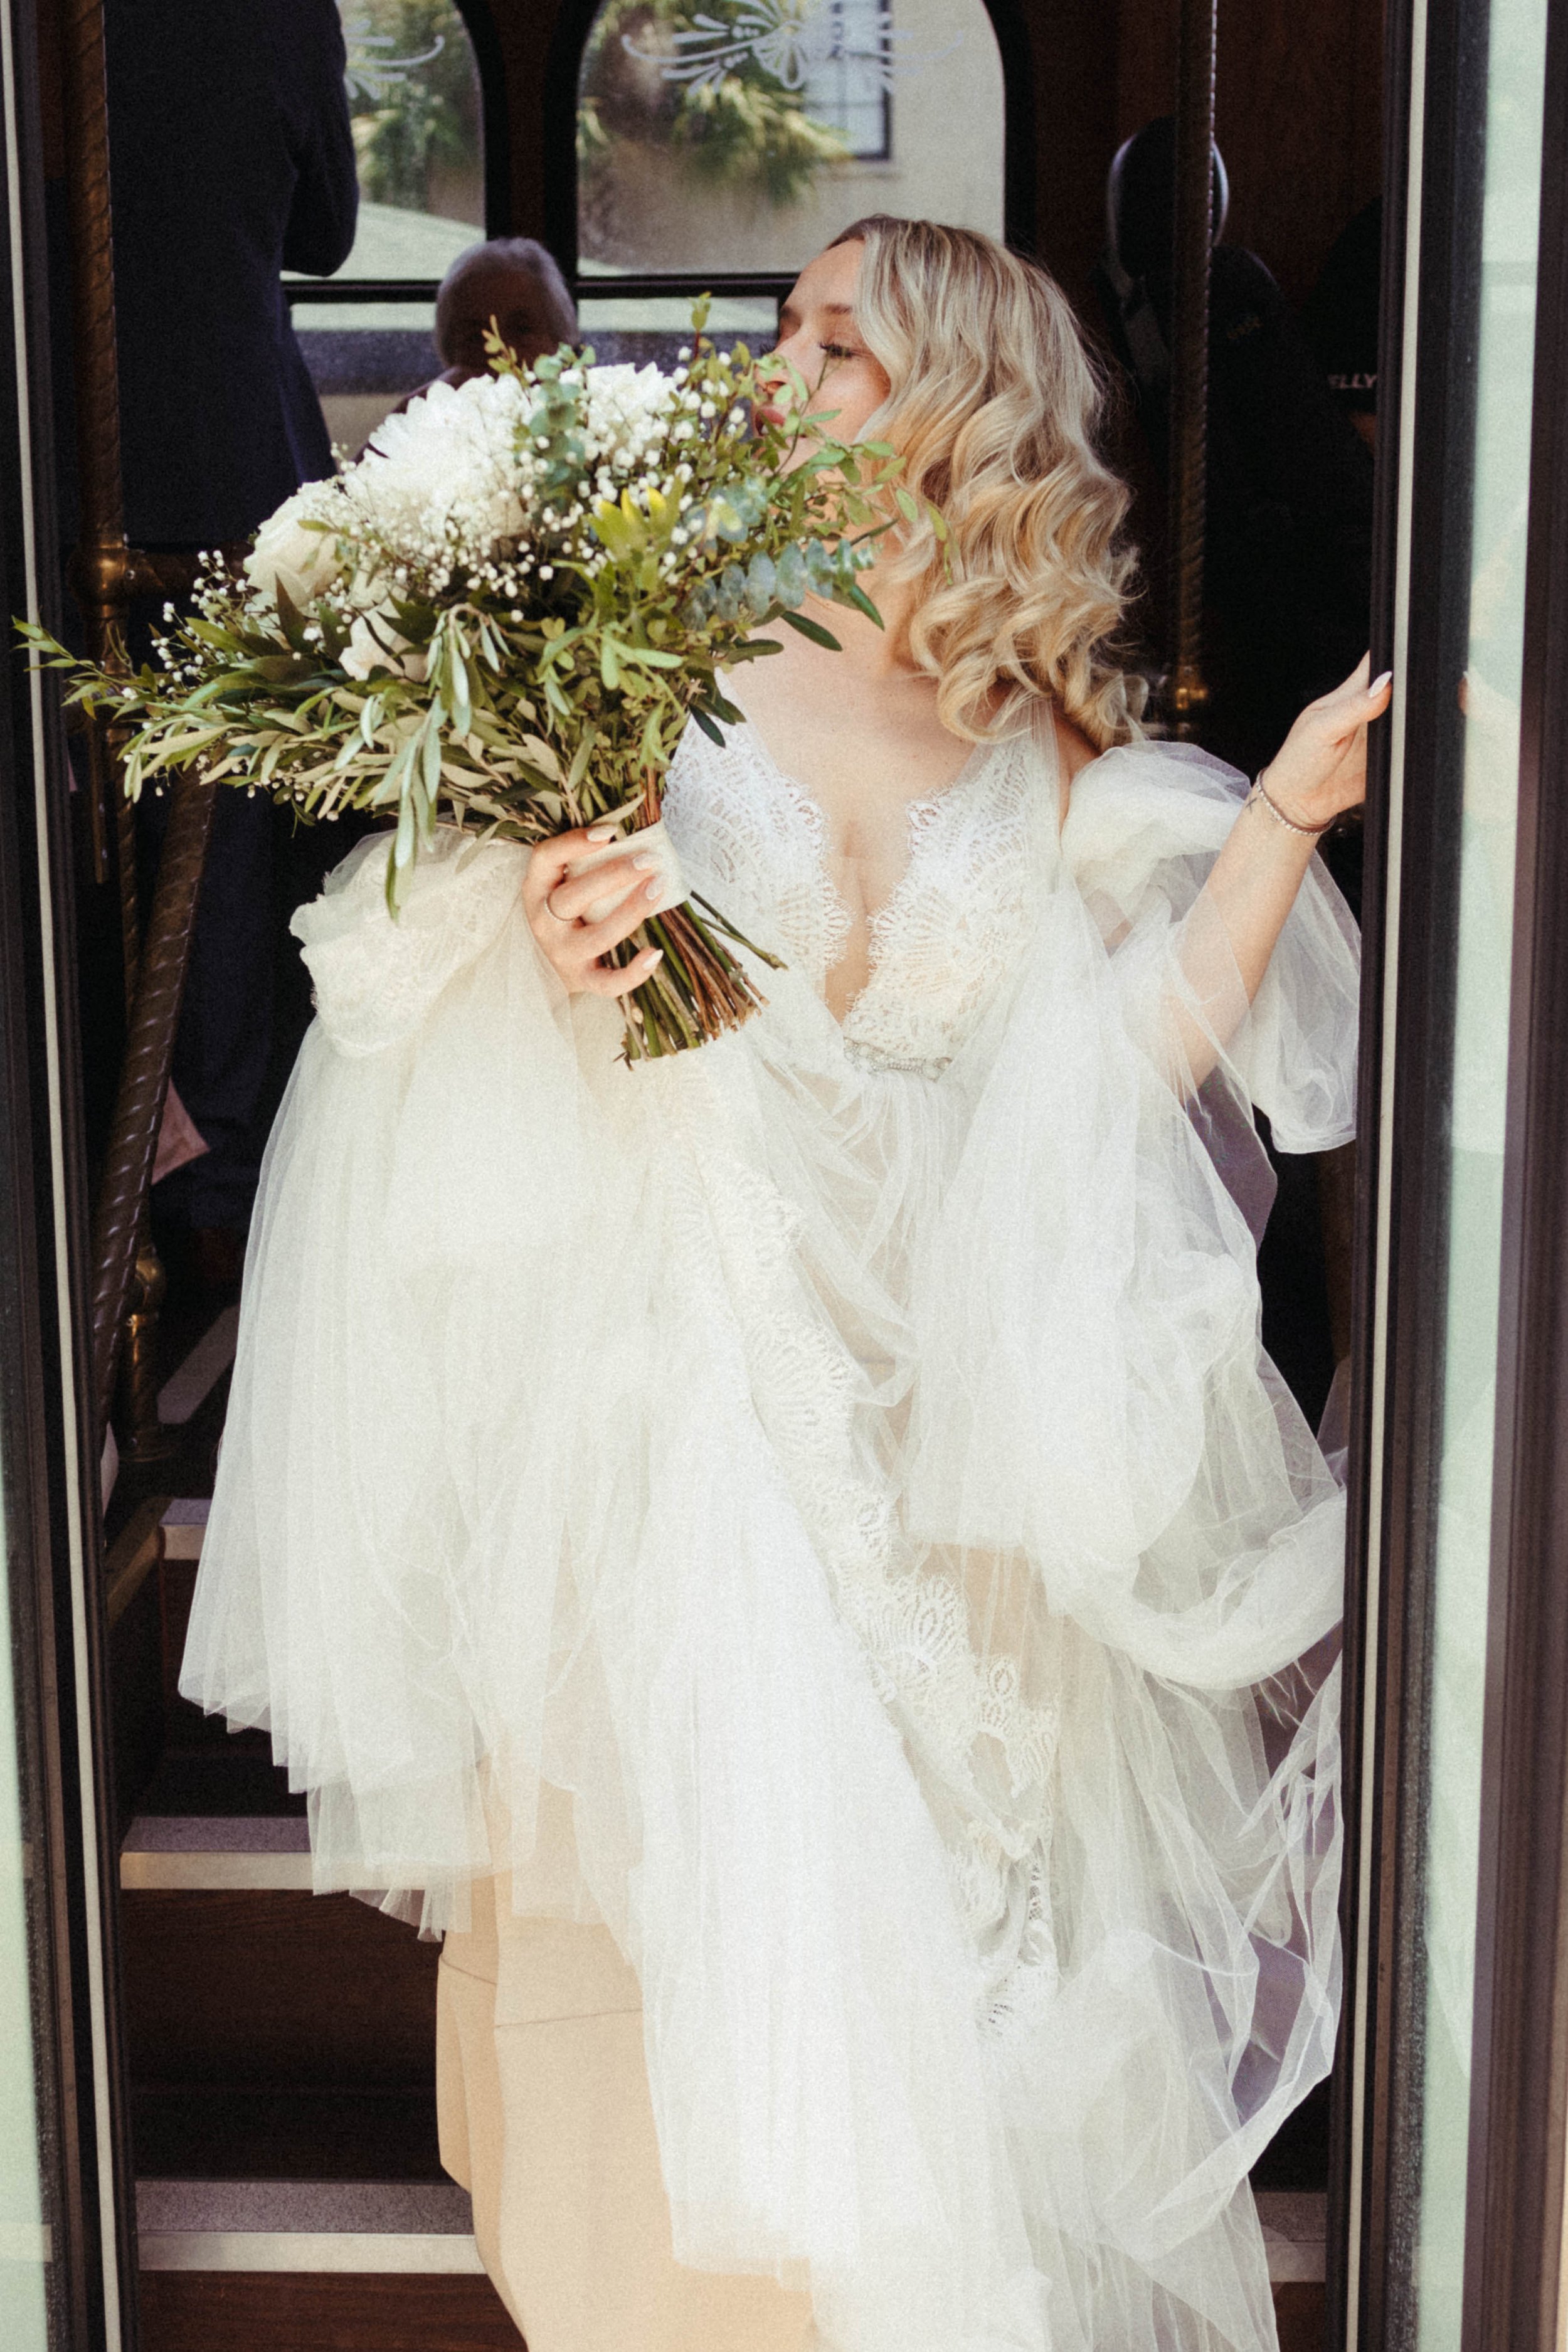 Savannah-bride-savannah-wedding-dresses-savannah-bridal-boutique-willowby-by-watters-aeryn-wedding-dress-charles-morris-center-wedding-garden-wedding-boho-wedding-dress-savannah-weddings-4.jpg